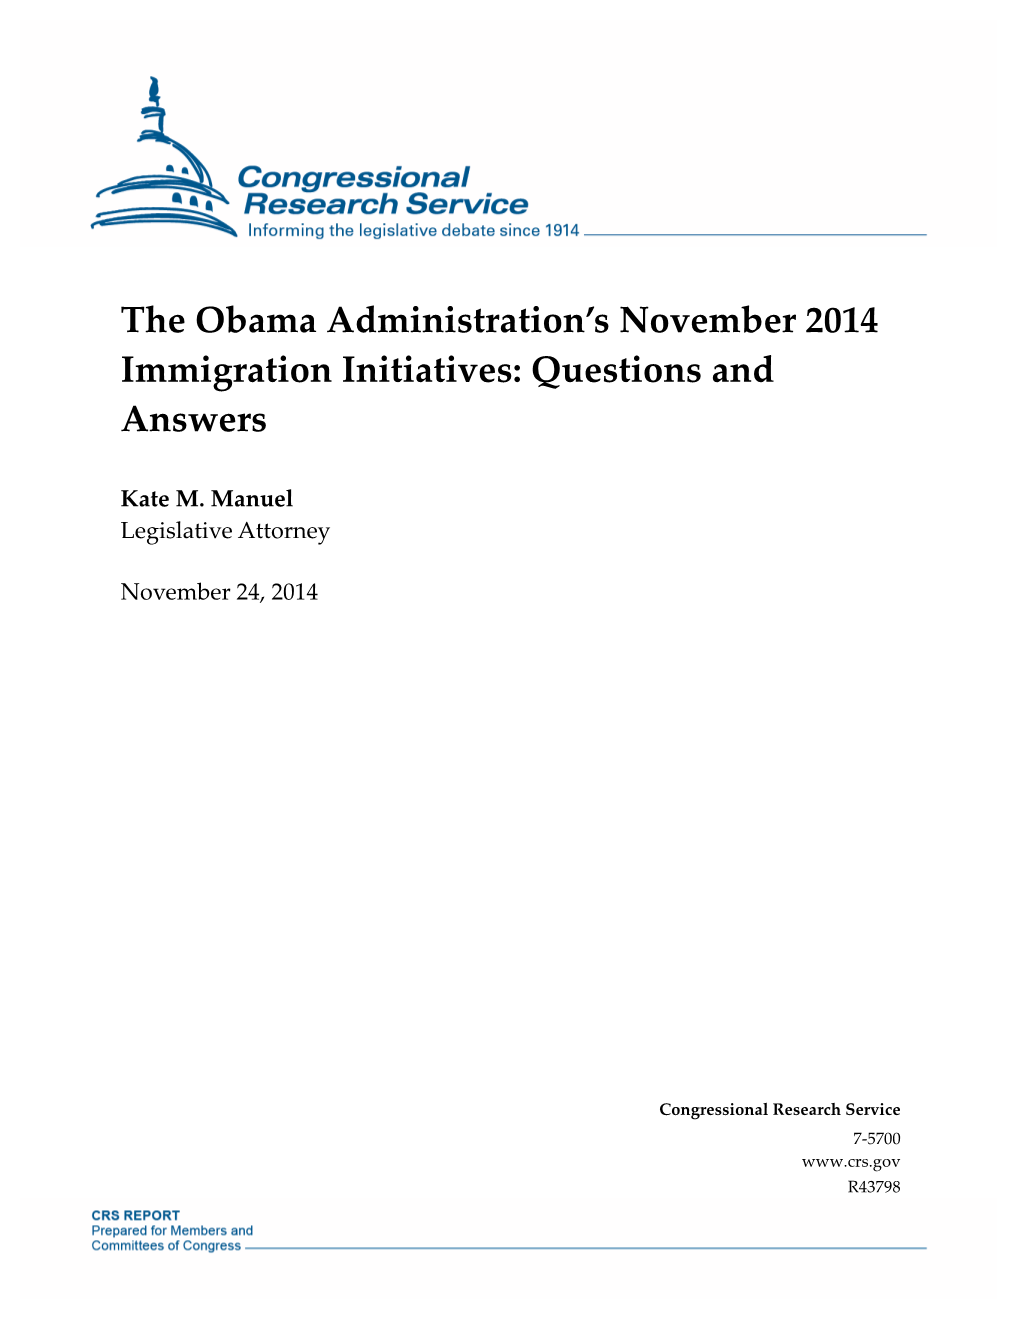 The Obama Administration's November 2014 Immigration